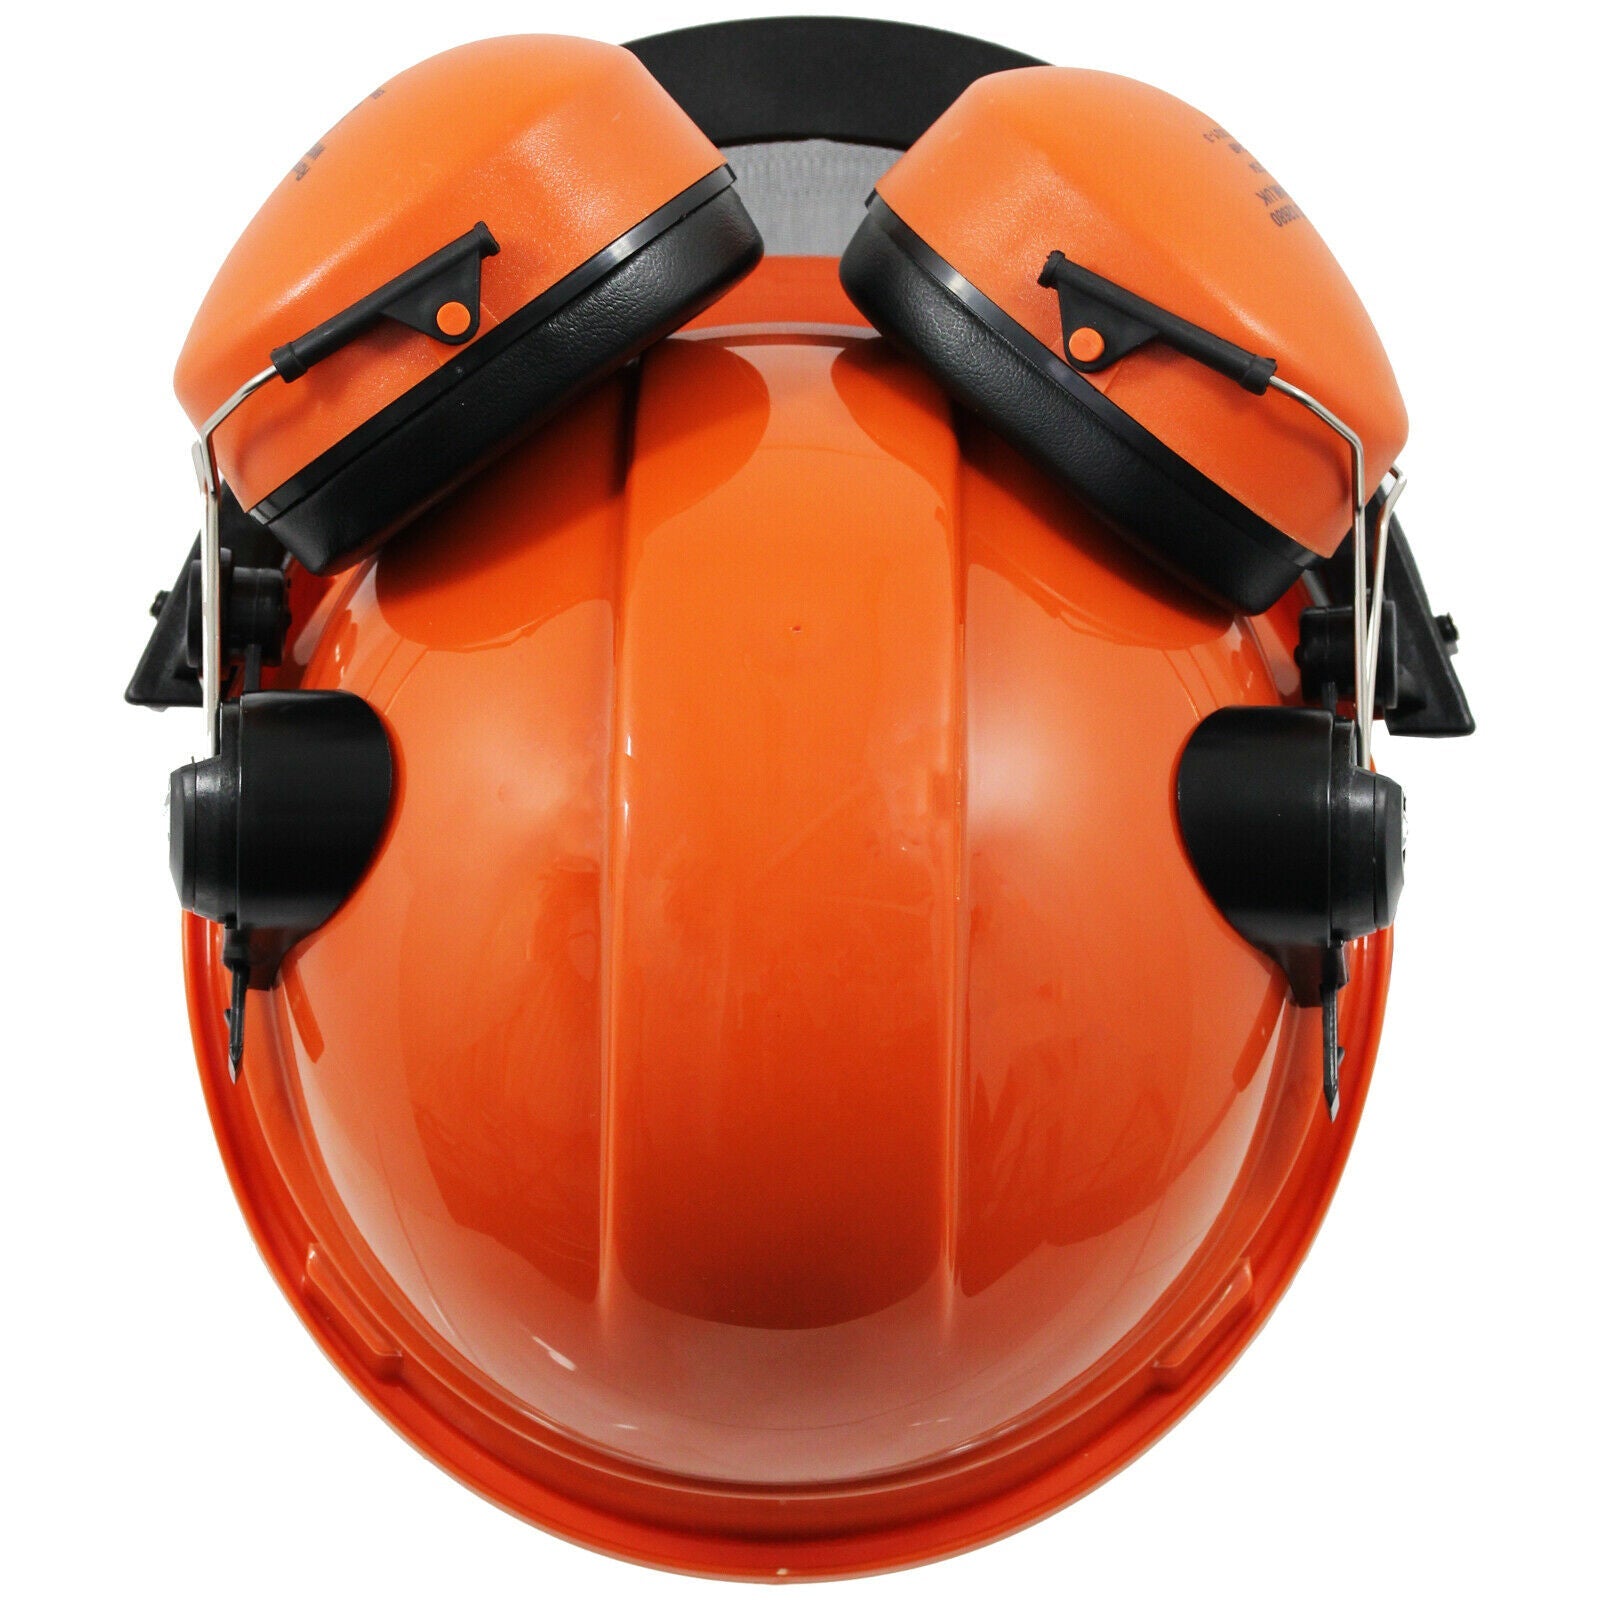 Chainsaw Safety Helmet with Mesh Visor Ear Muffs Orange